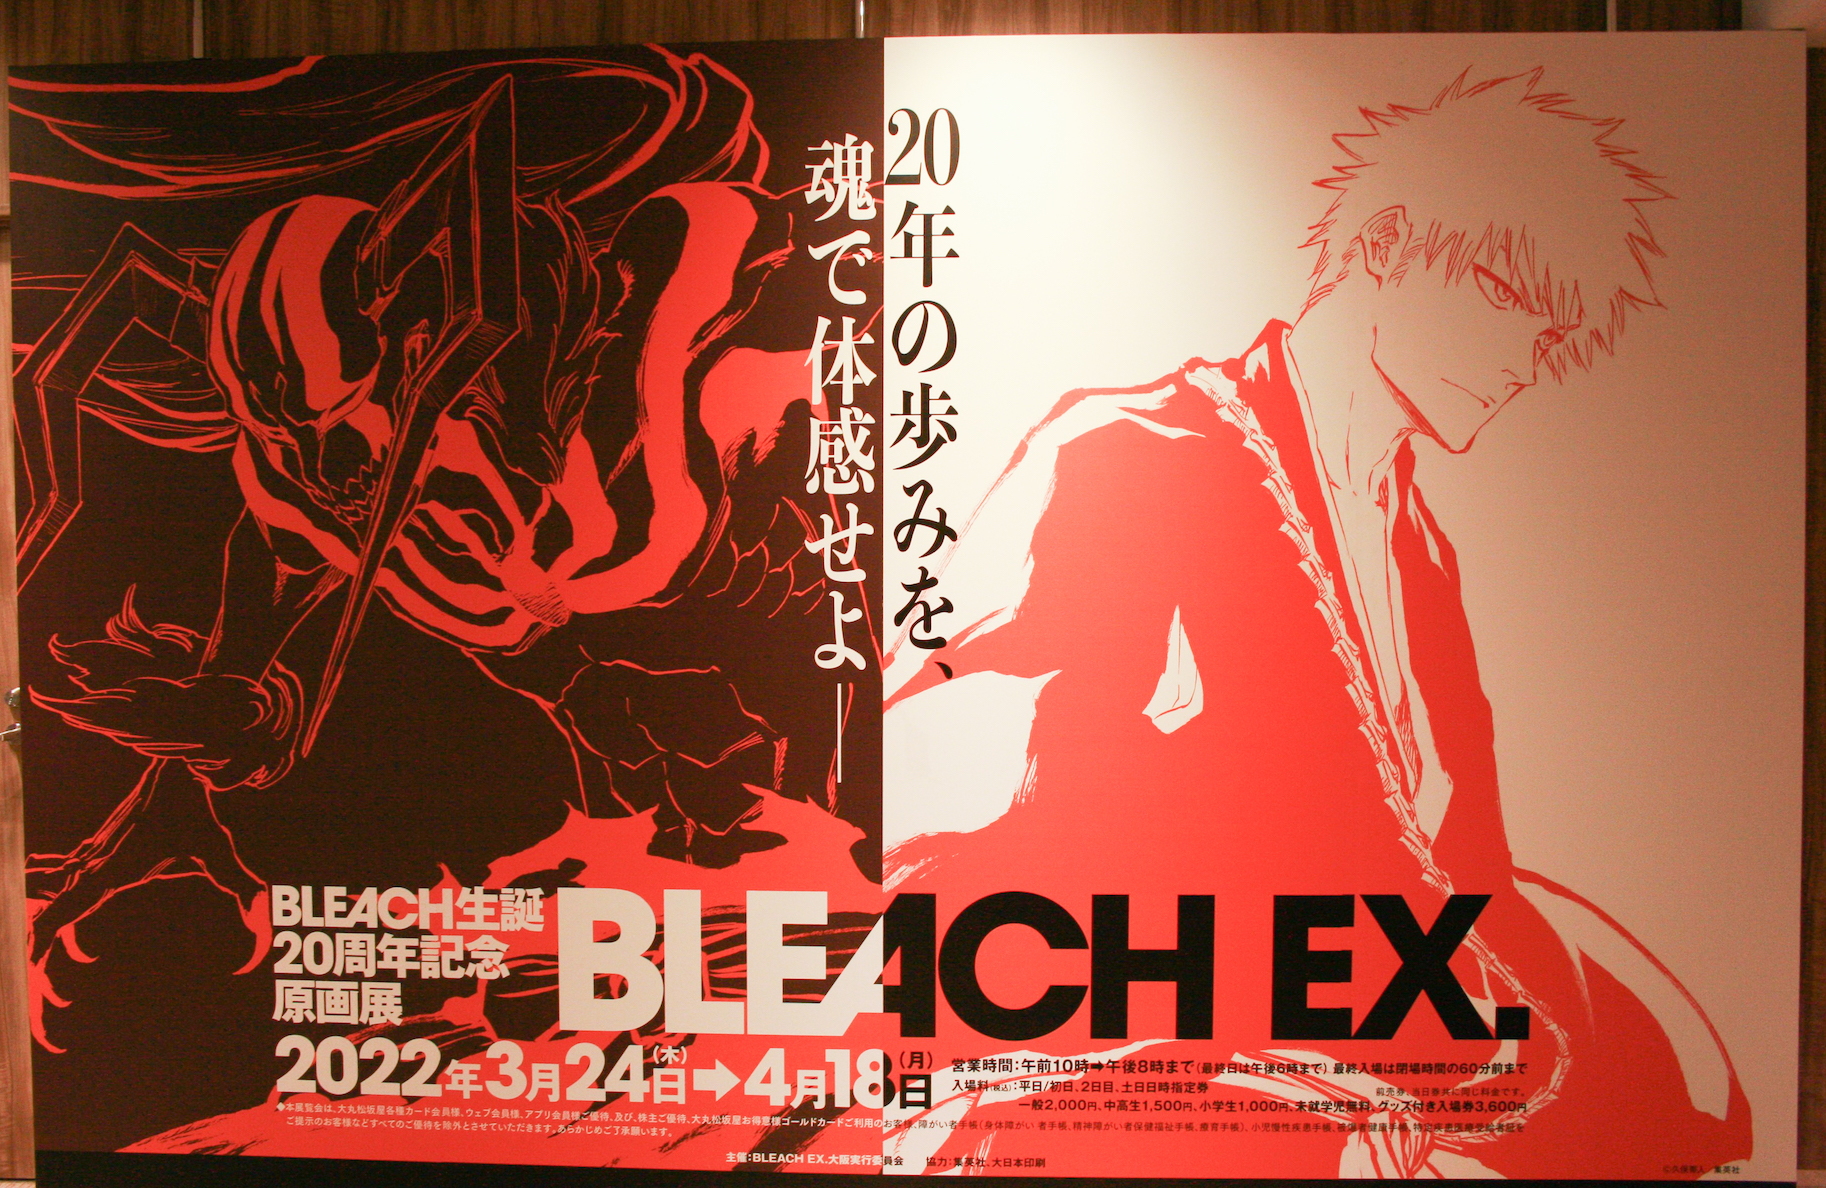 BLEACH』生誕20周年記念原画展『BLEACH EX.』大阪にて開幕、原画と共に